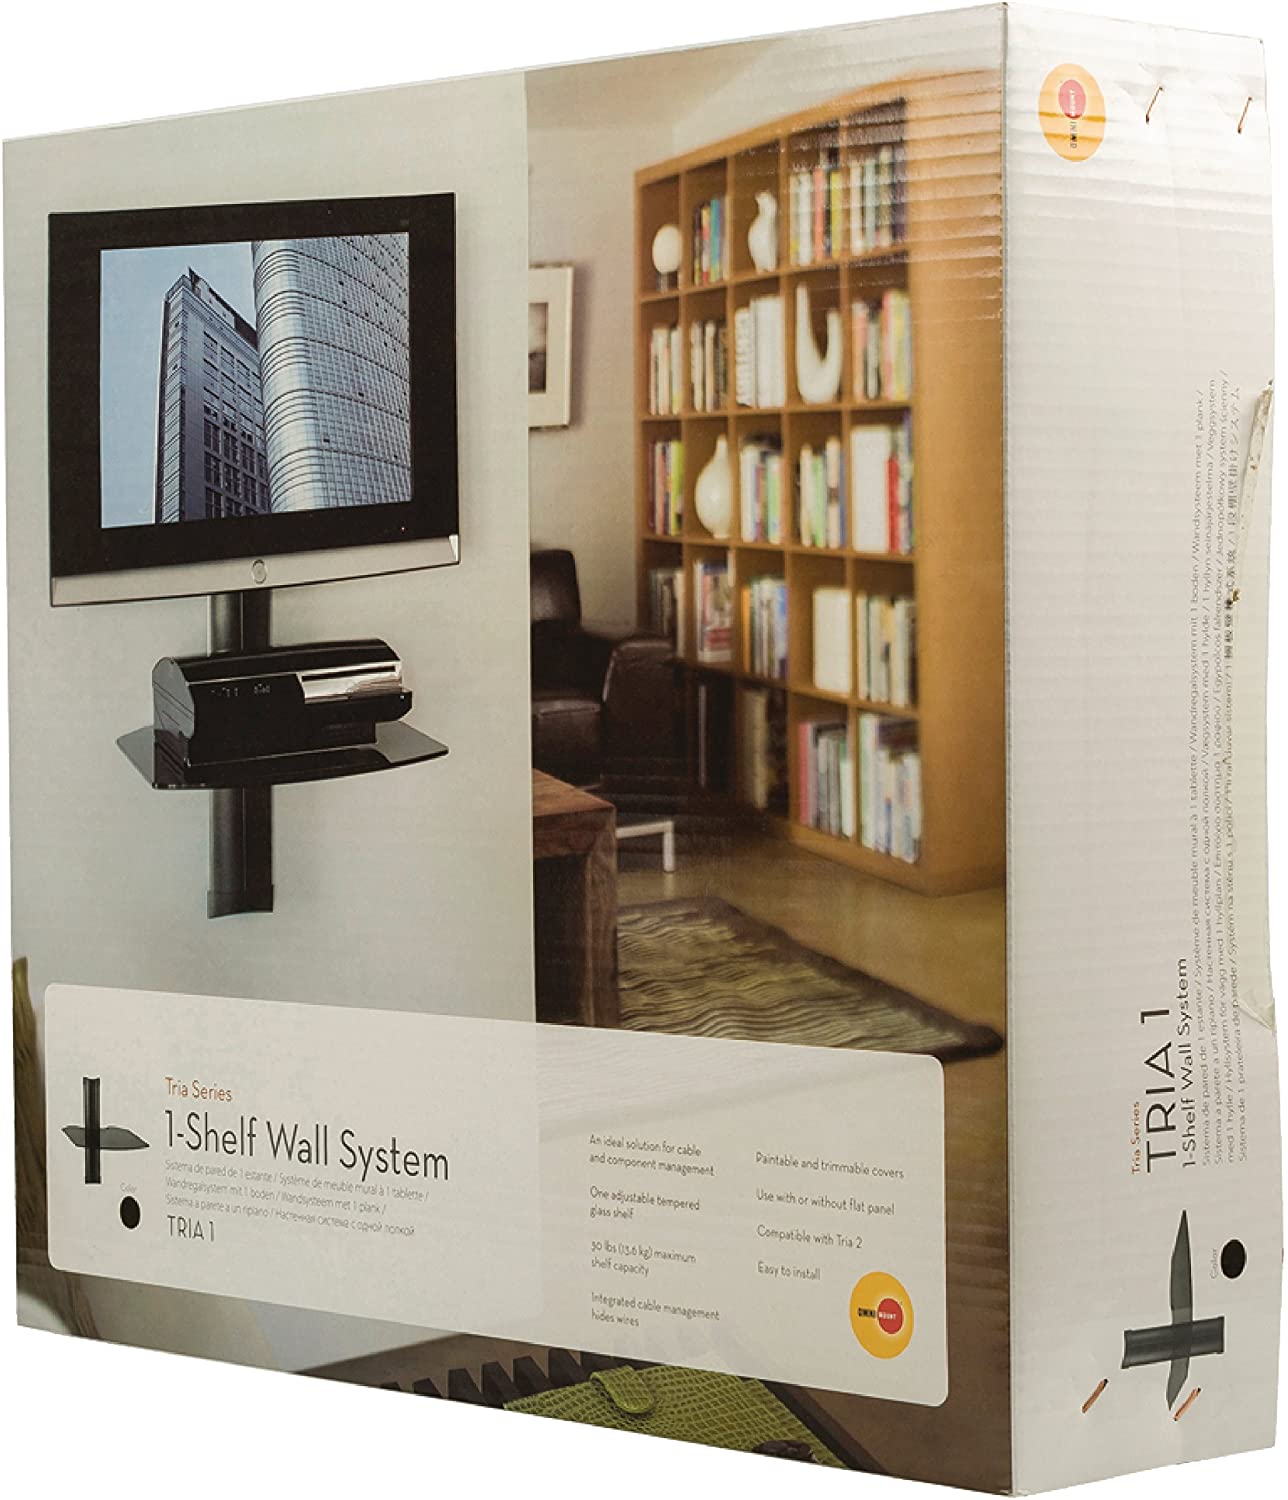 OmniMount Tria Series 1-Shelf Wall System